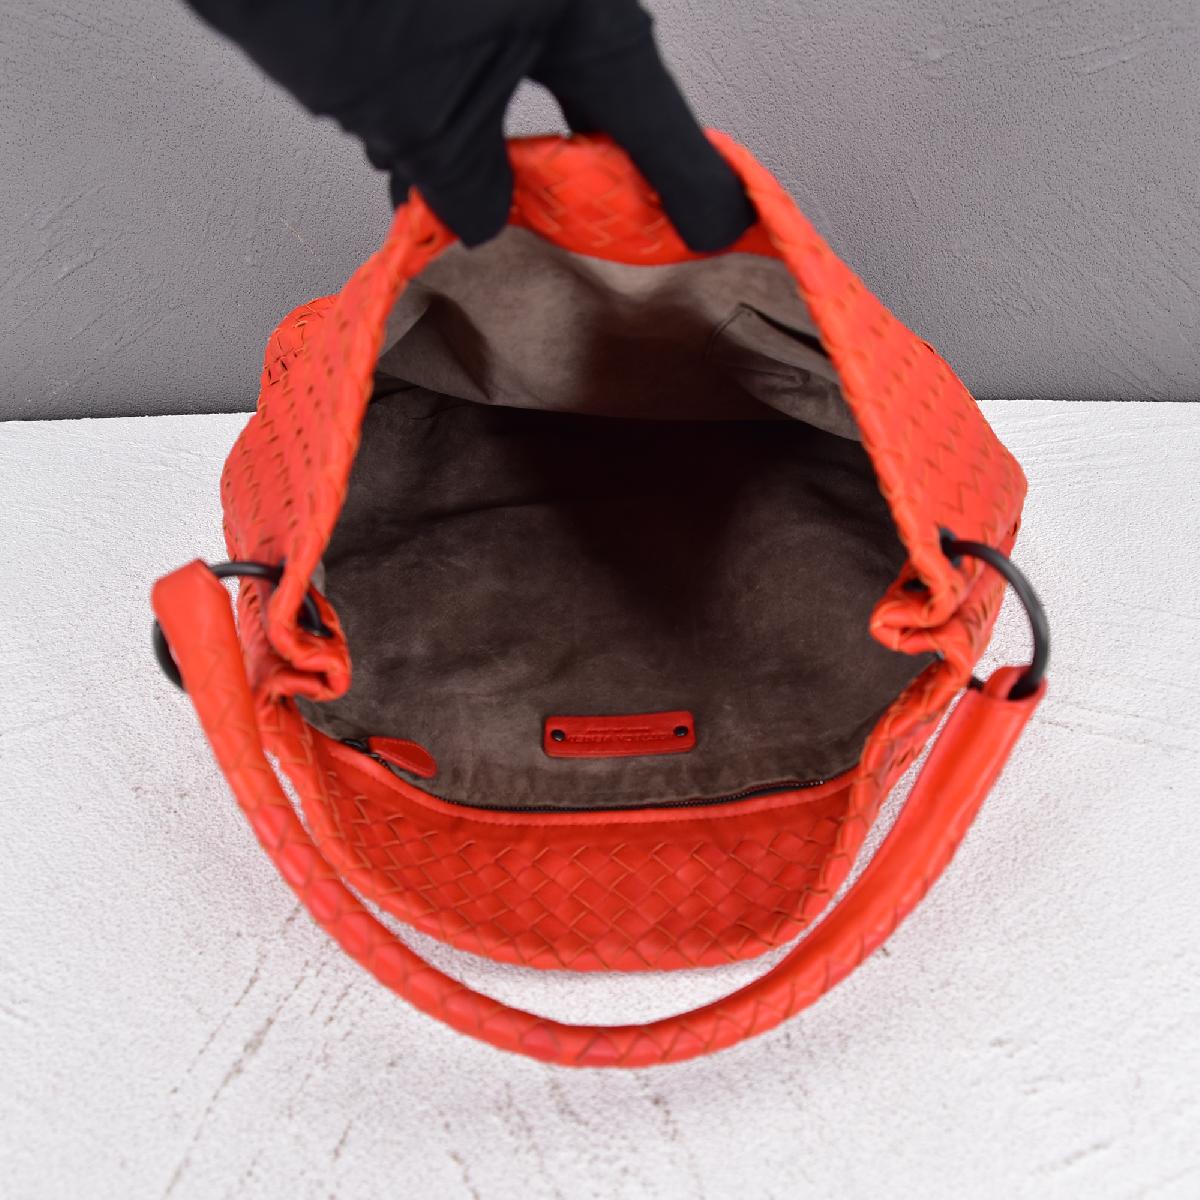 Intecciato Leather Shoulder Bag